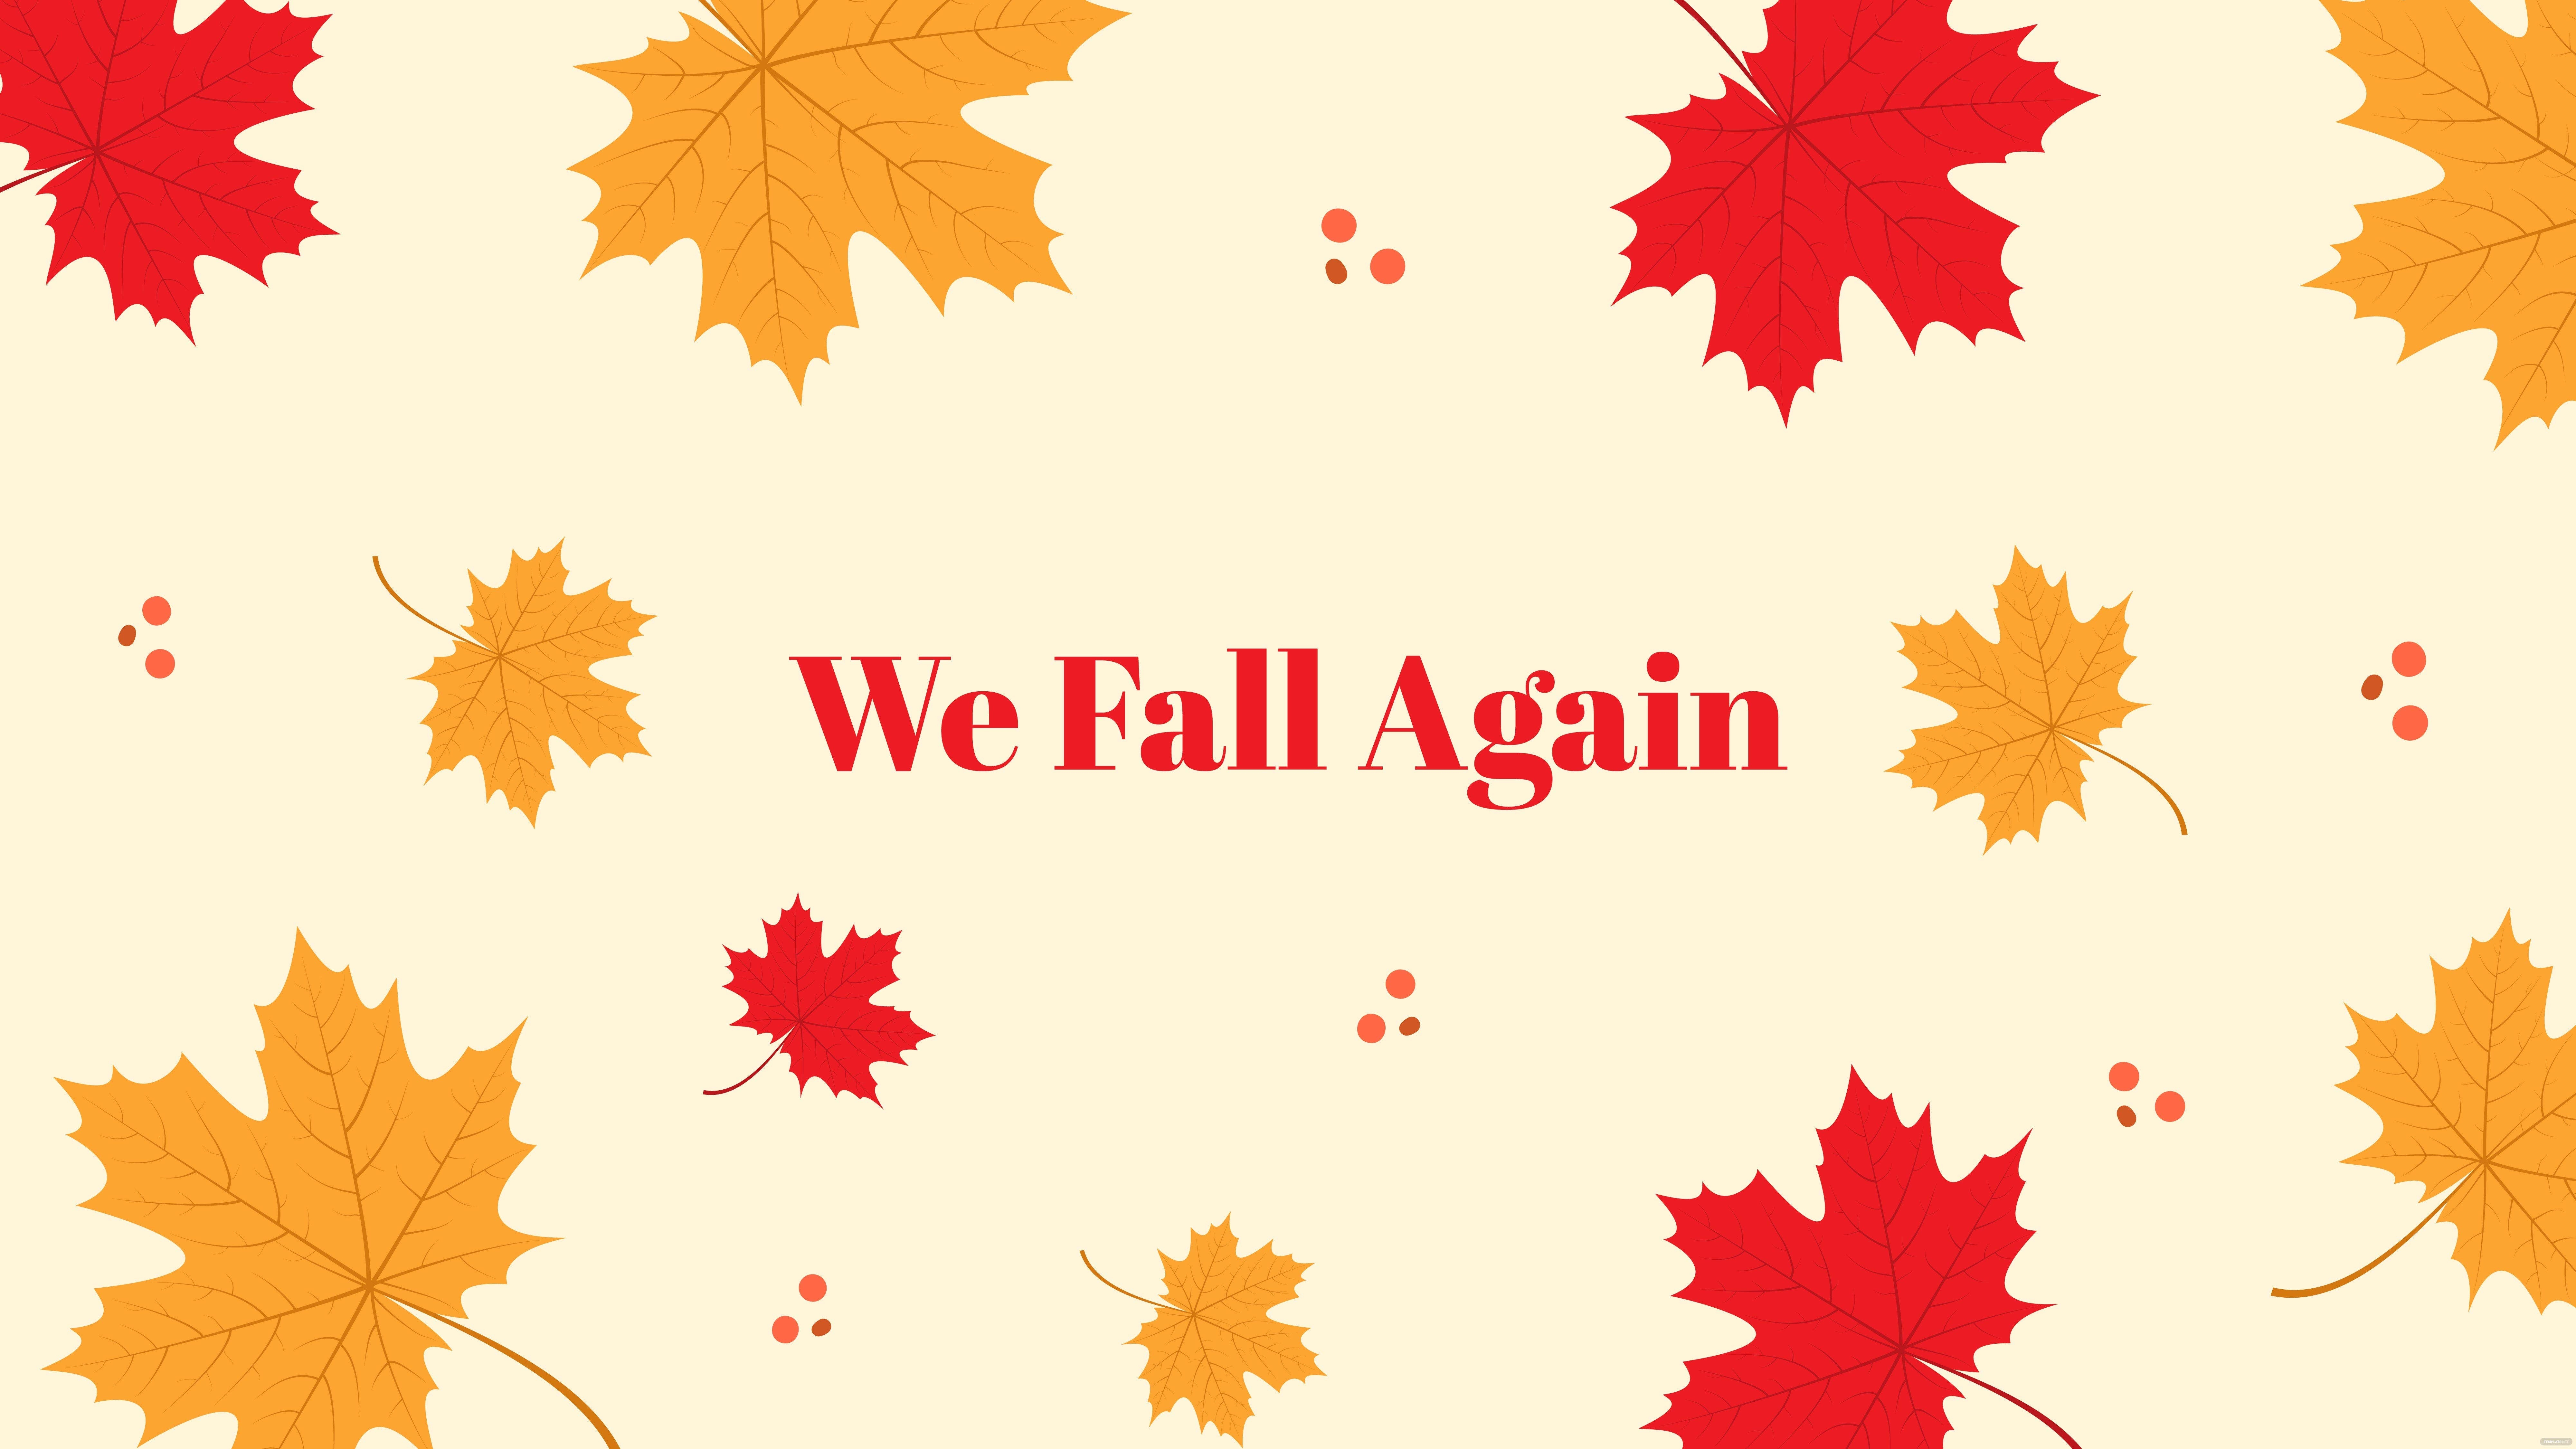 HD wallpaper, 8K, We Fall Again, 5K, Maple Leaves, Preppy Fall